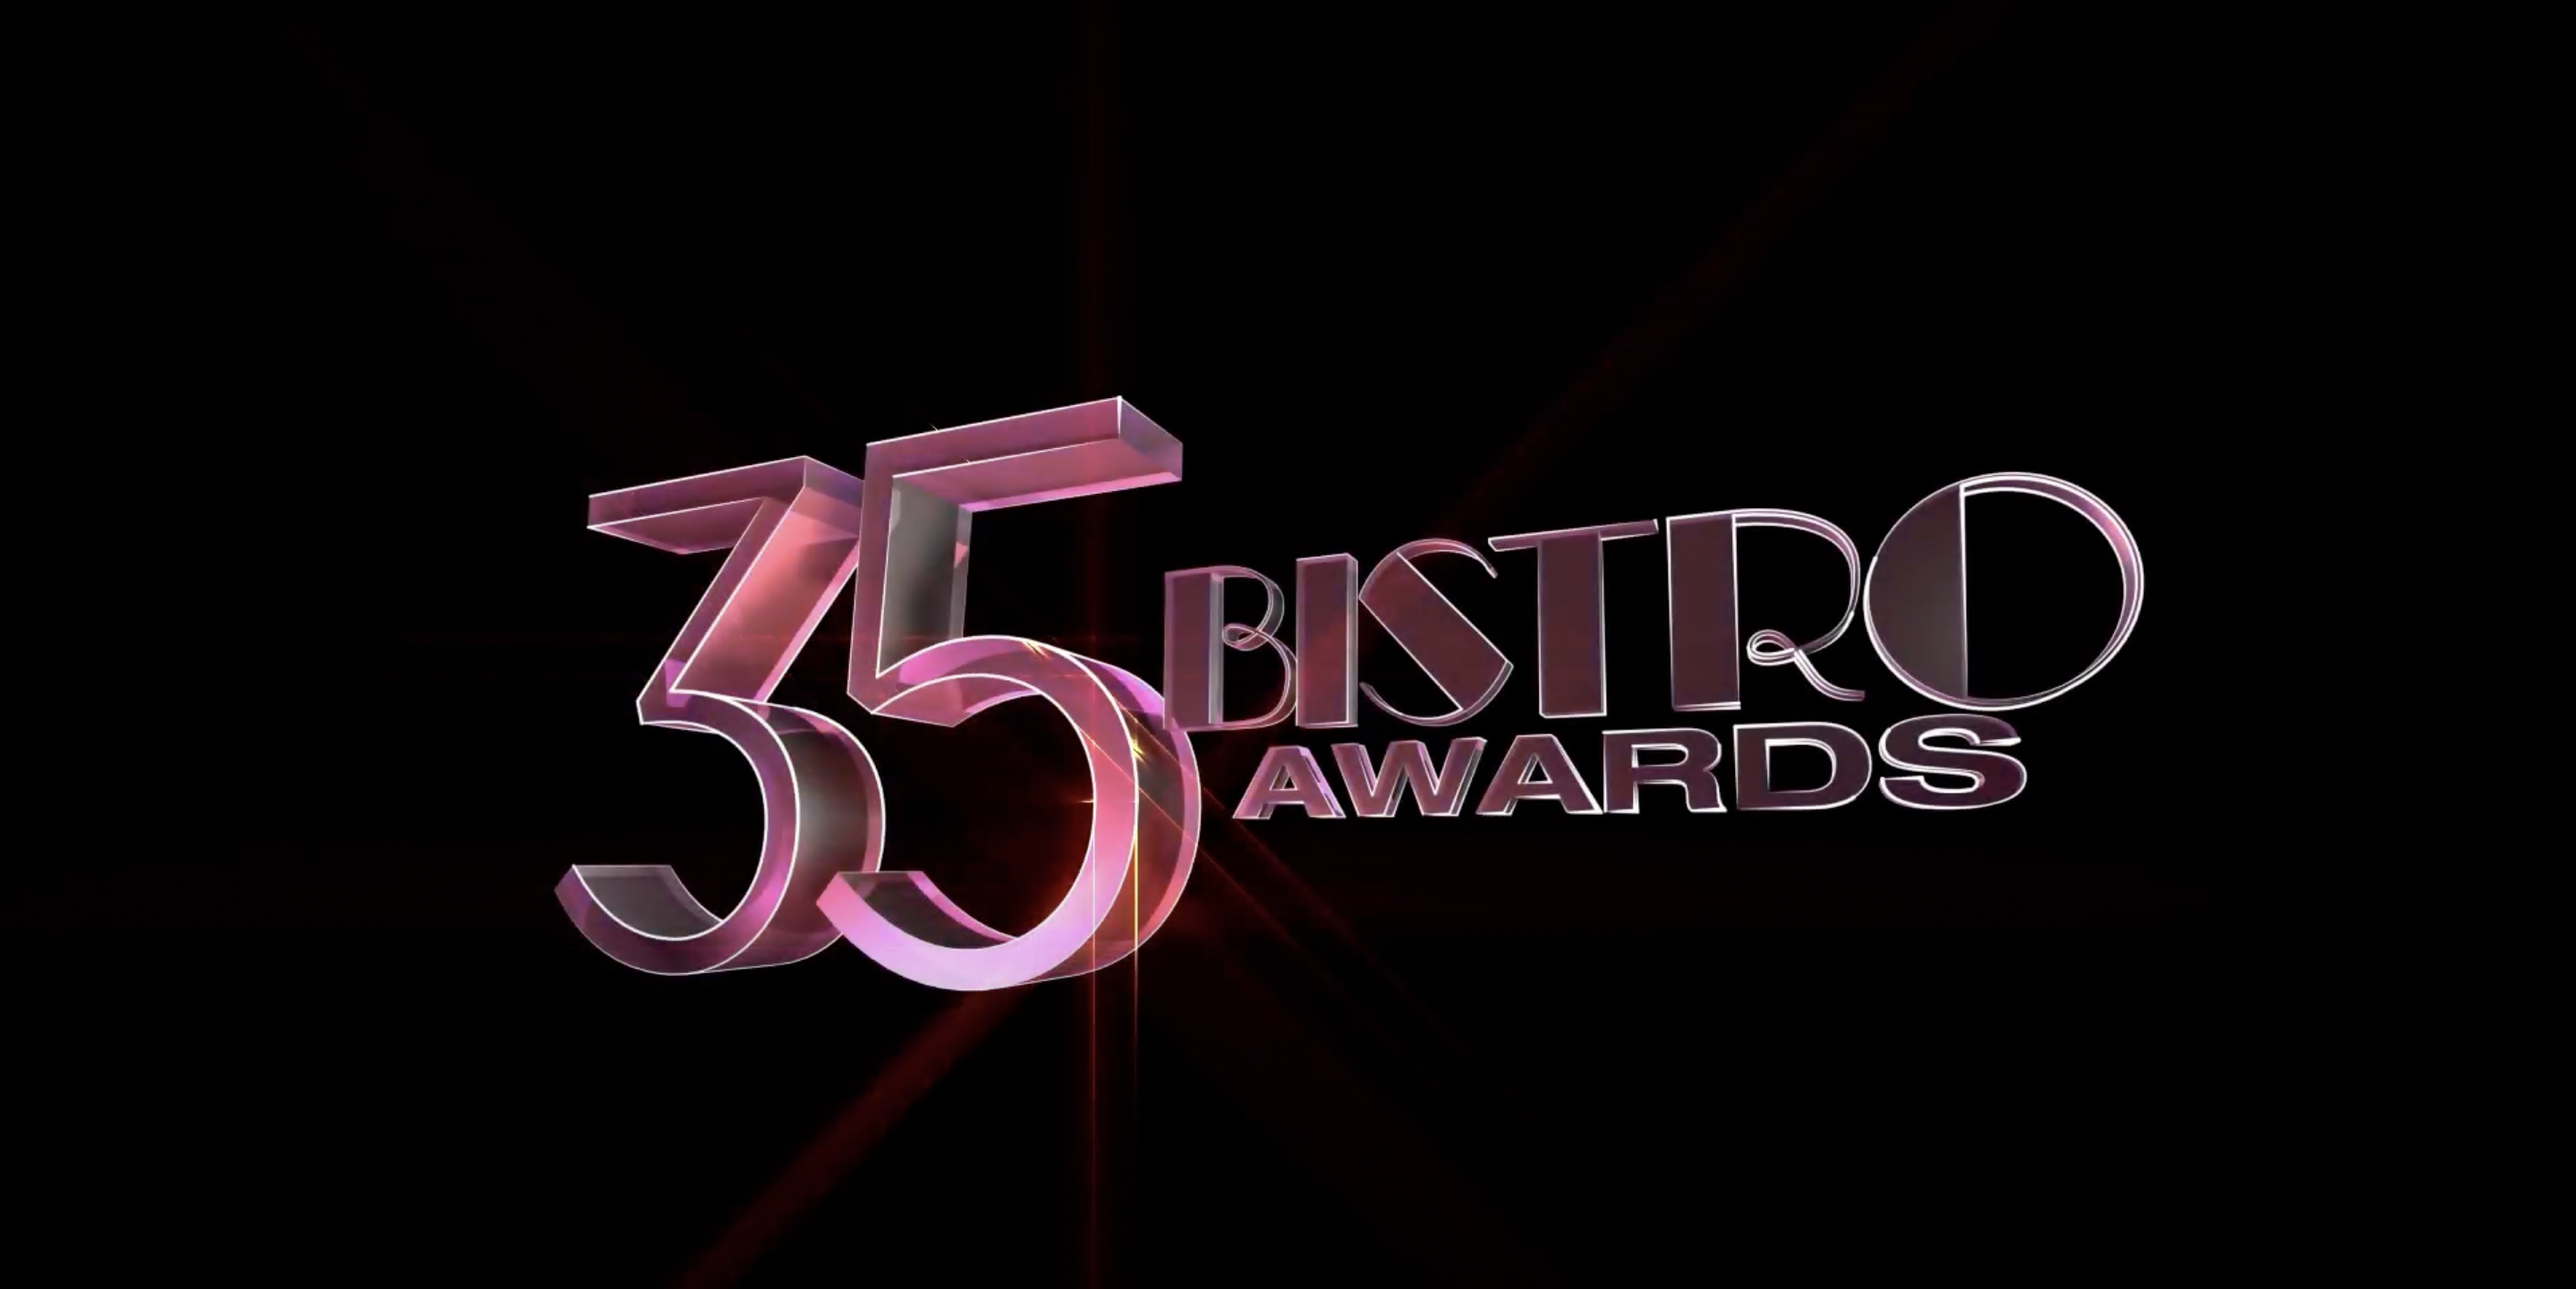 Bistro Awards Video